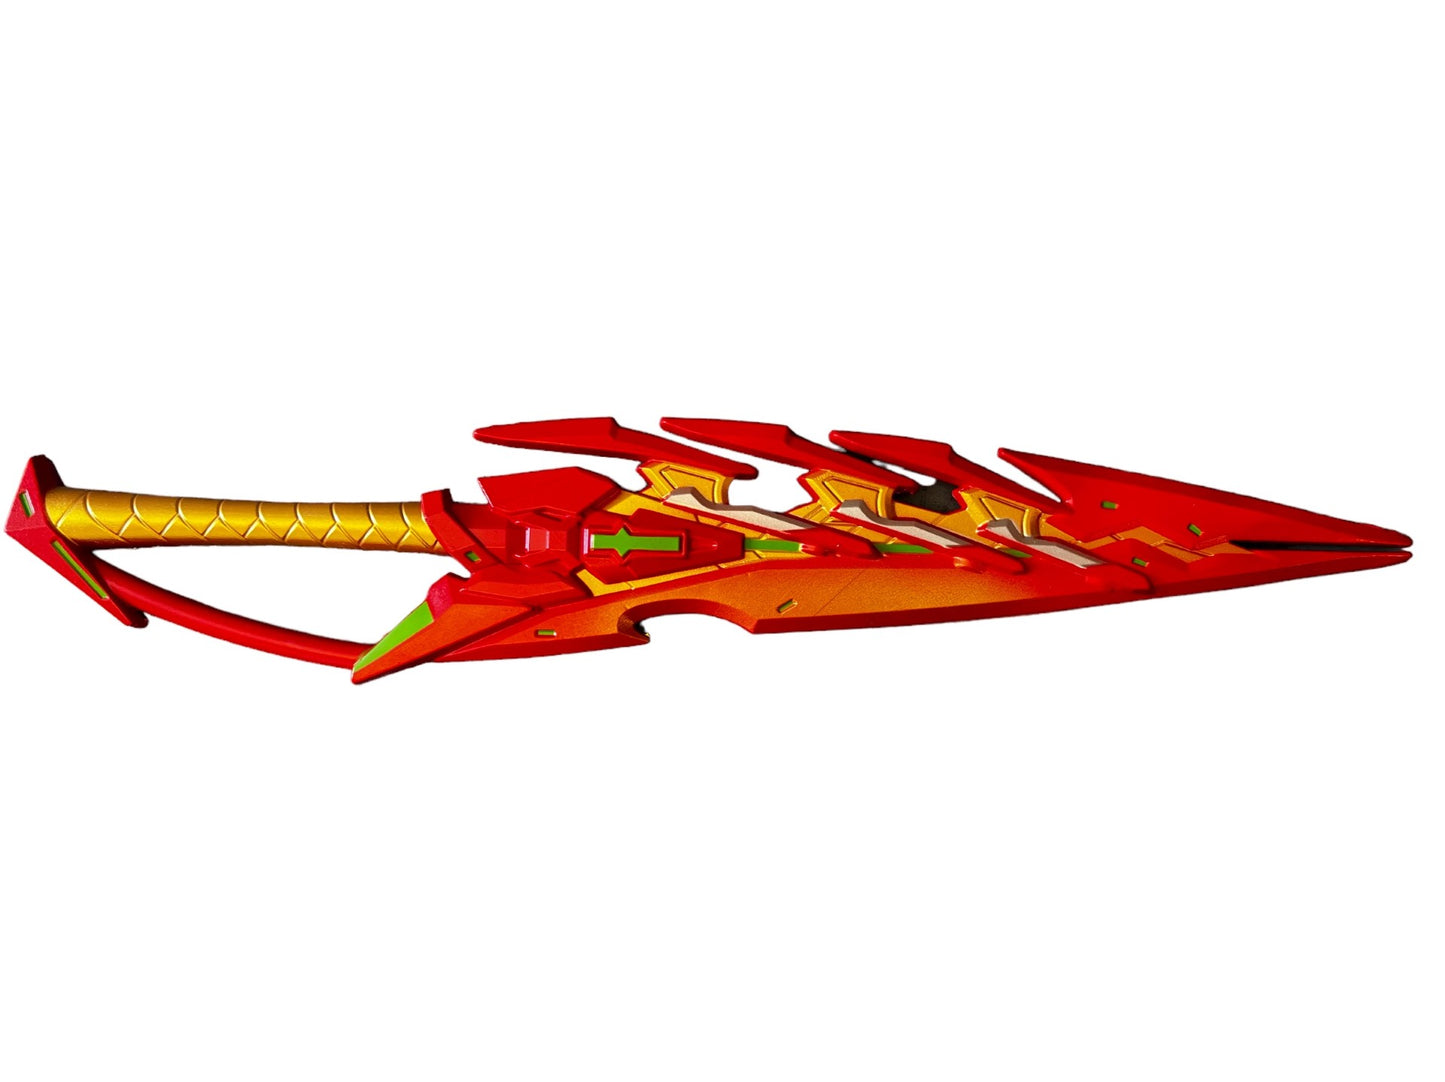 Xeno Blade Replica Foam Swords